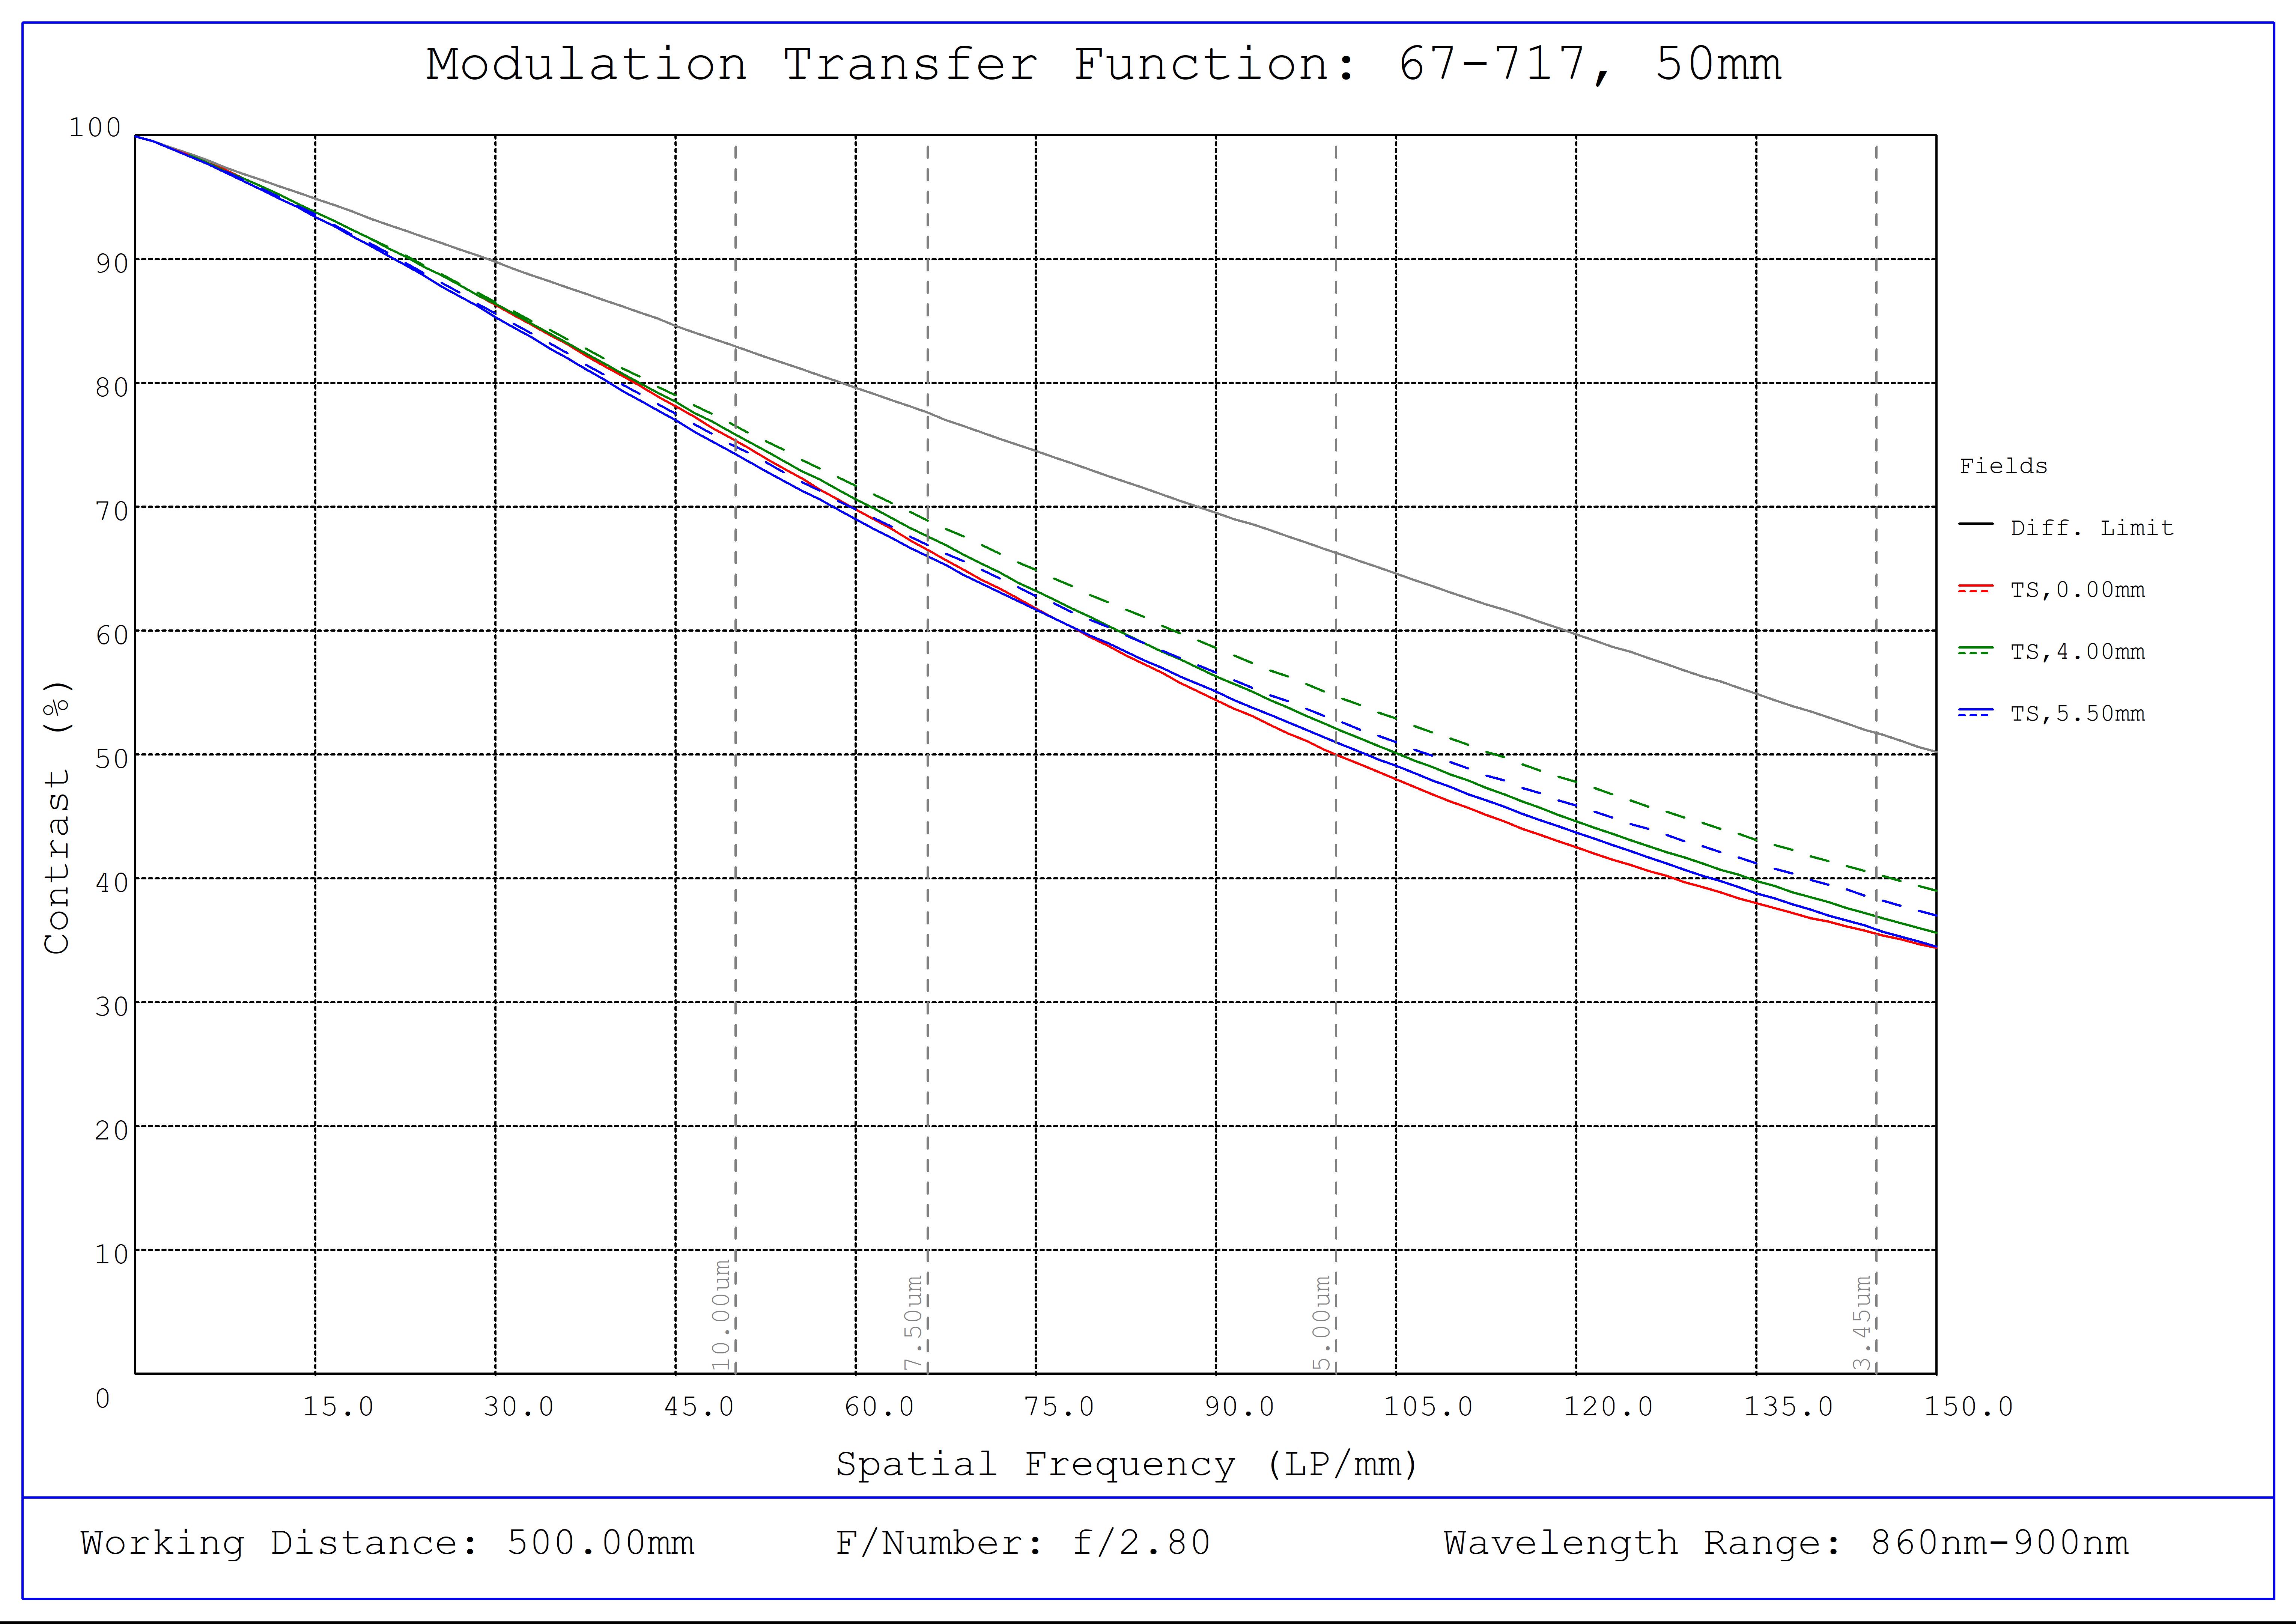 #67-717, 50mm C VIS-NIR Series Fixed Focal Length Lens, Modulated Transfer Function (MTF) Plot (NIR), 500mm Working Distance, f2.8